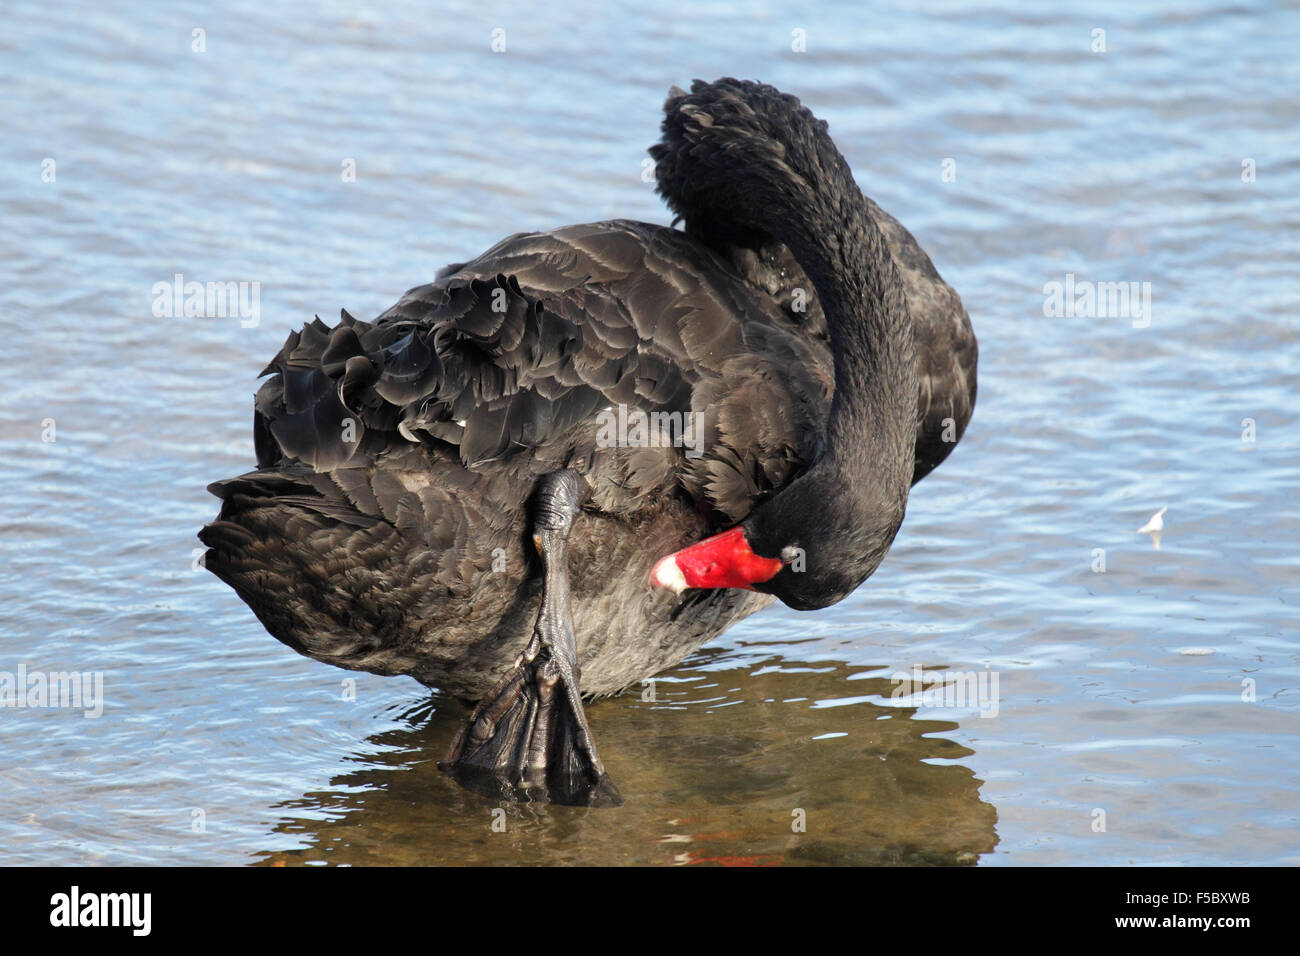 Black Swan (Cygnus olor) am Ufer des Sees King in Lakes Entrance, Victoria, Australien. Stockfoto